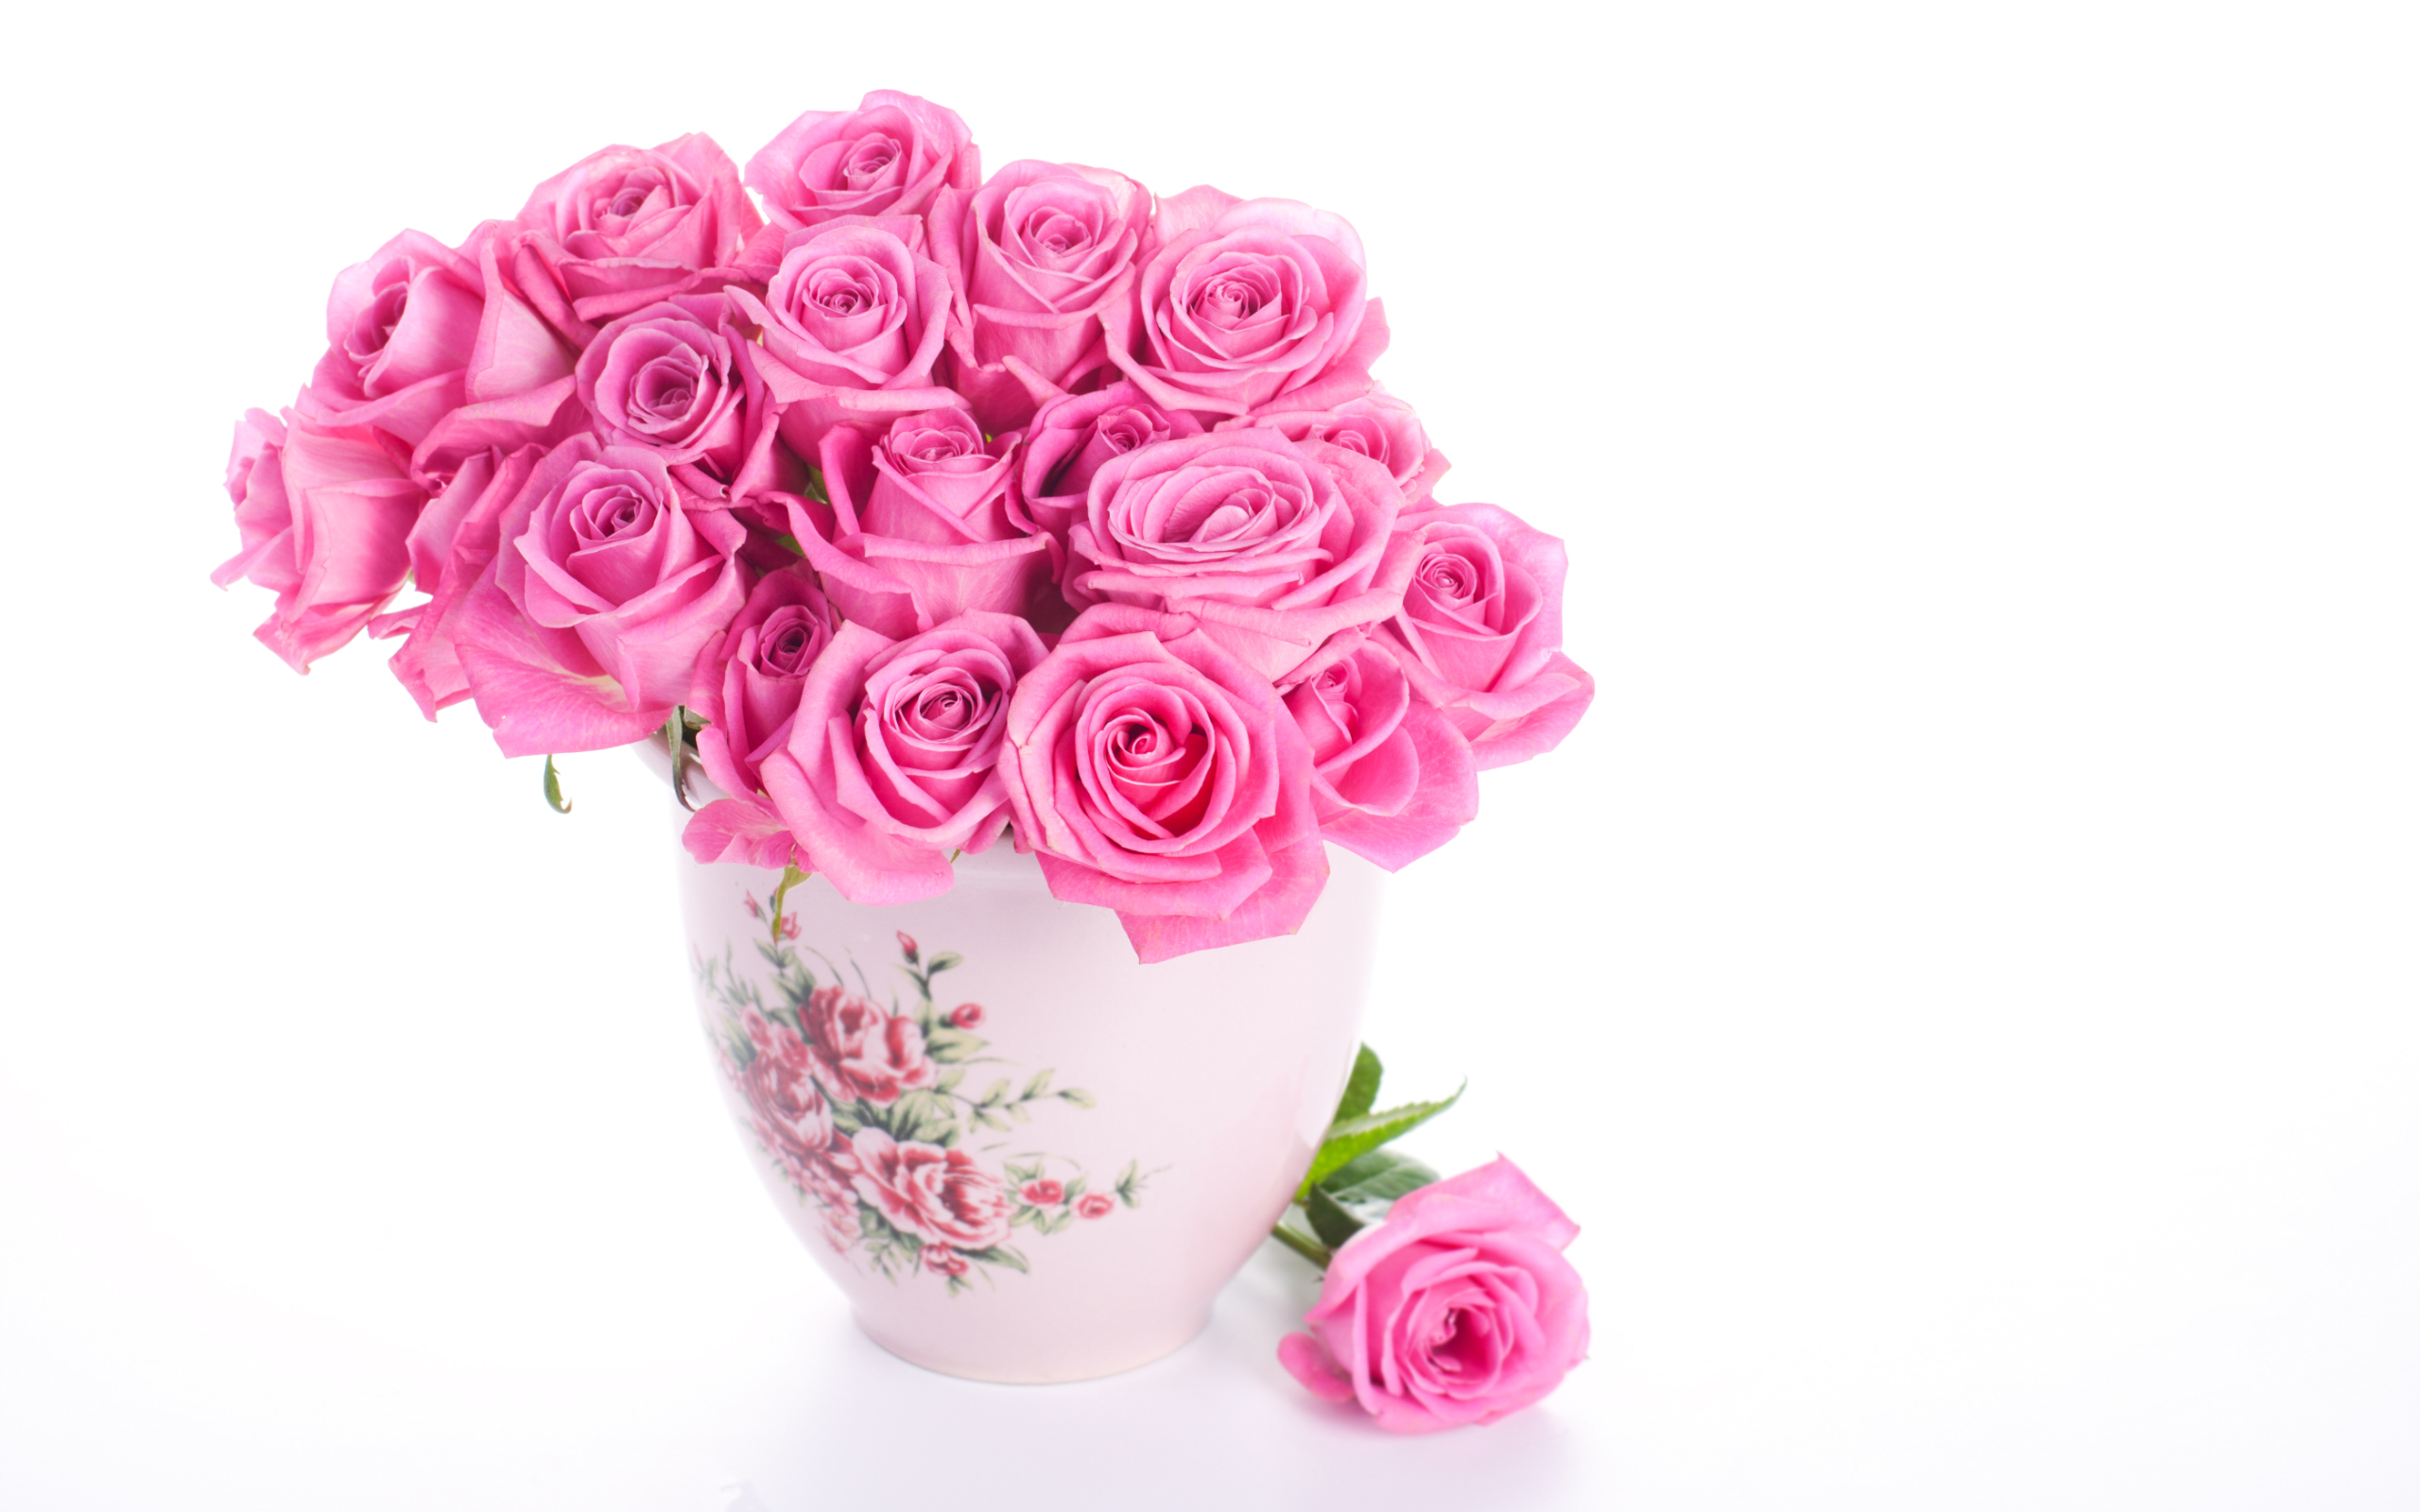 gentle wallpaper,pink,flower,garden roses,rose,cut flowers